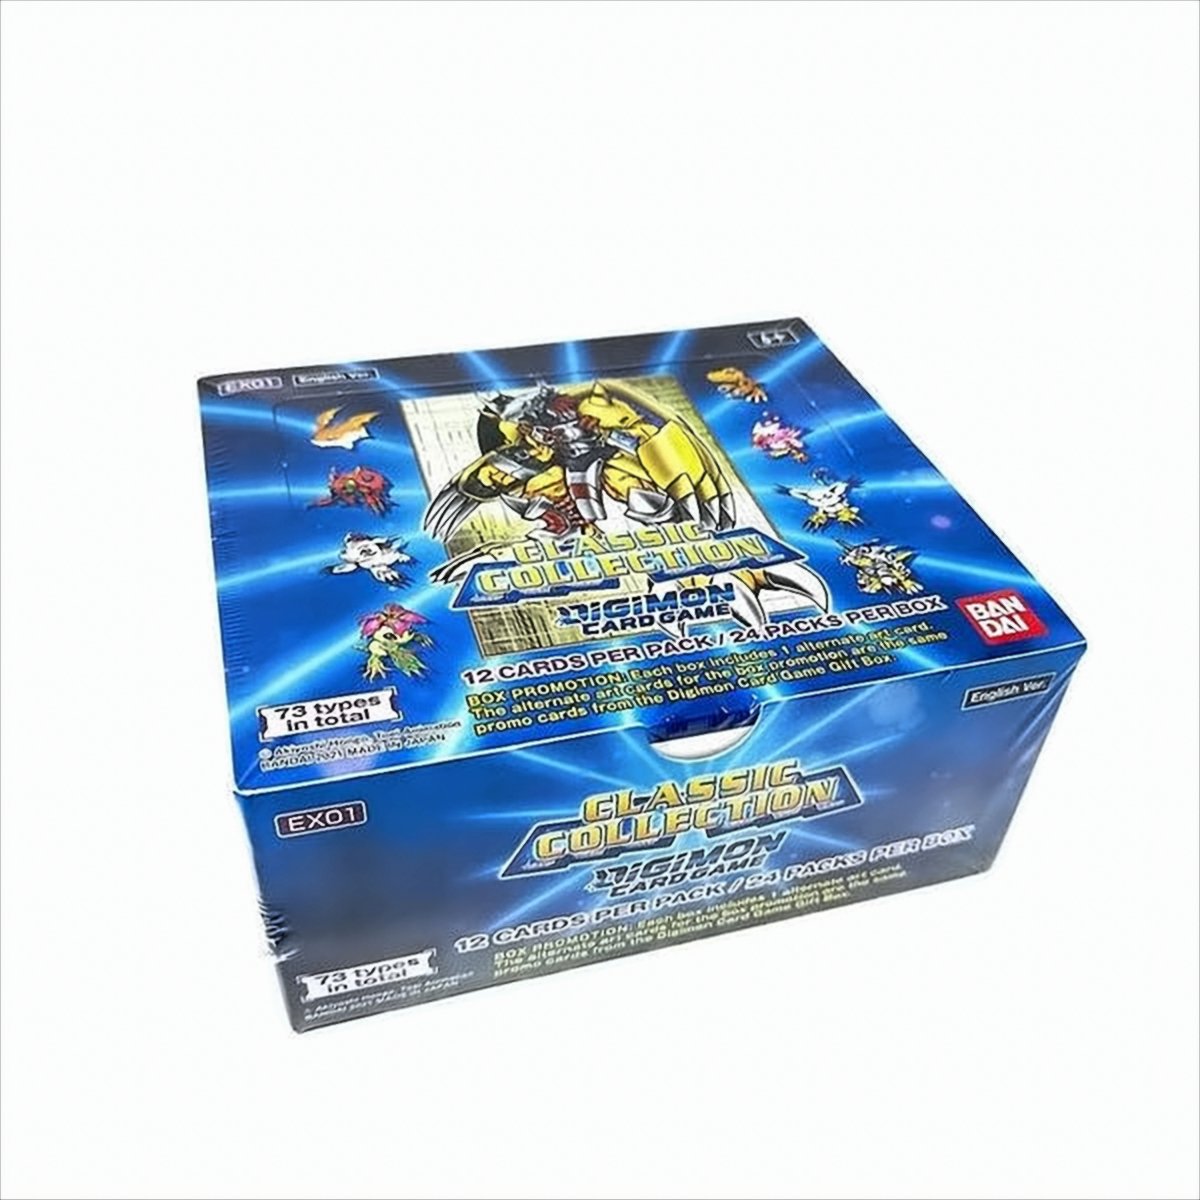 Digimon Card Game -Classic Collection EX-01 Bo Display englisch von Bandai